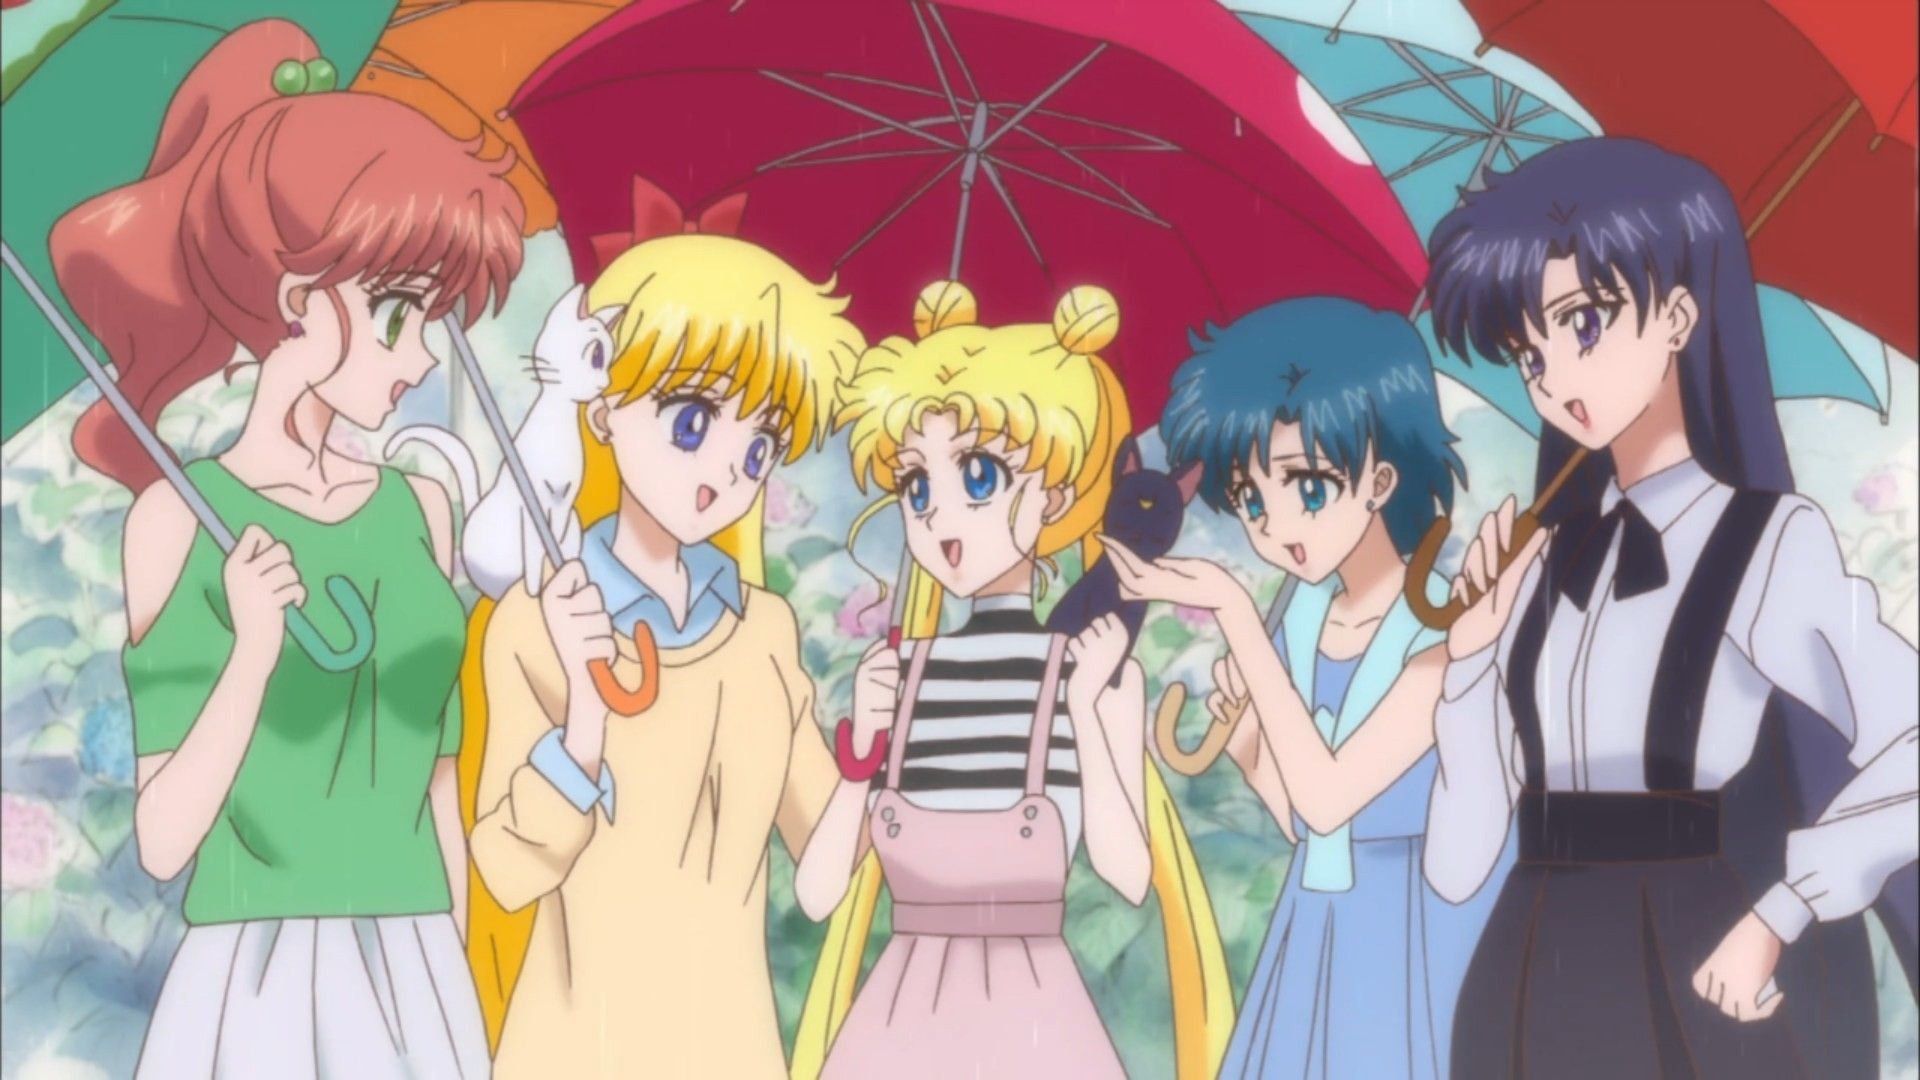 Sailor Moon Anime Aesthetic Wallpaper Desktop